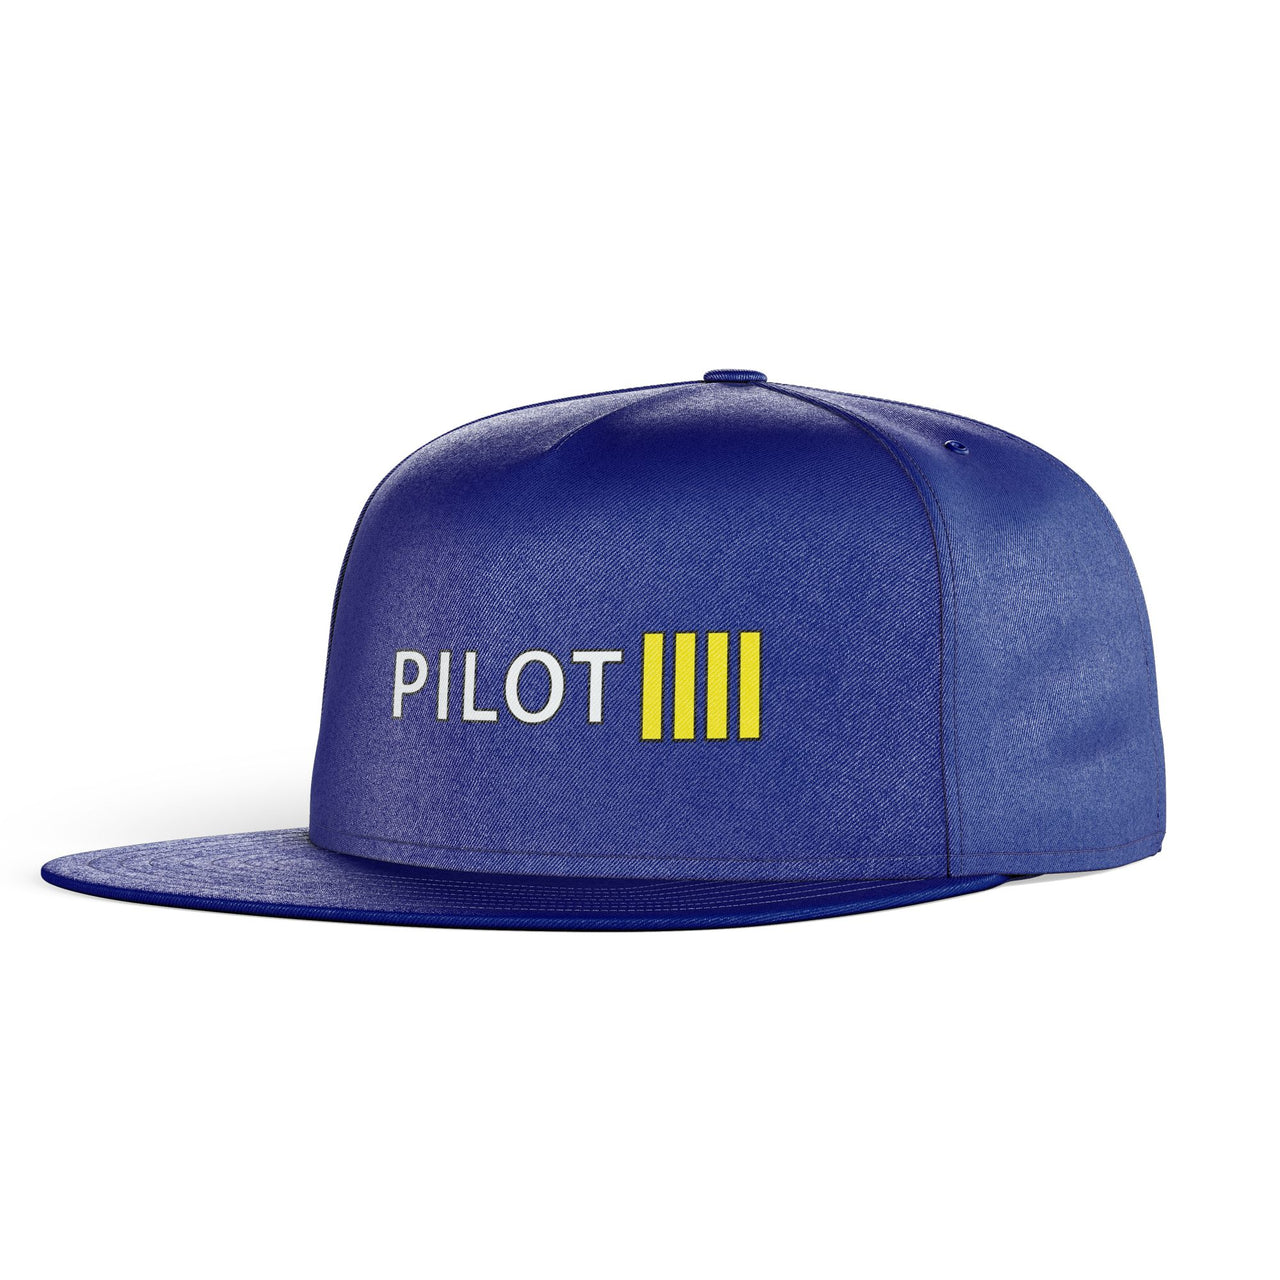 Pilot & Stripes (4 Lines) Designed Snapback Caps & Hats